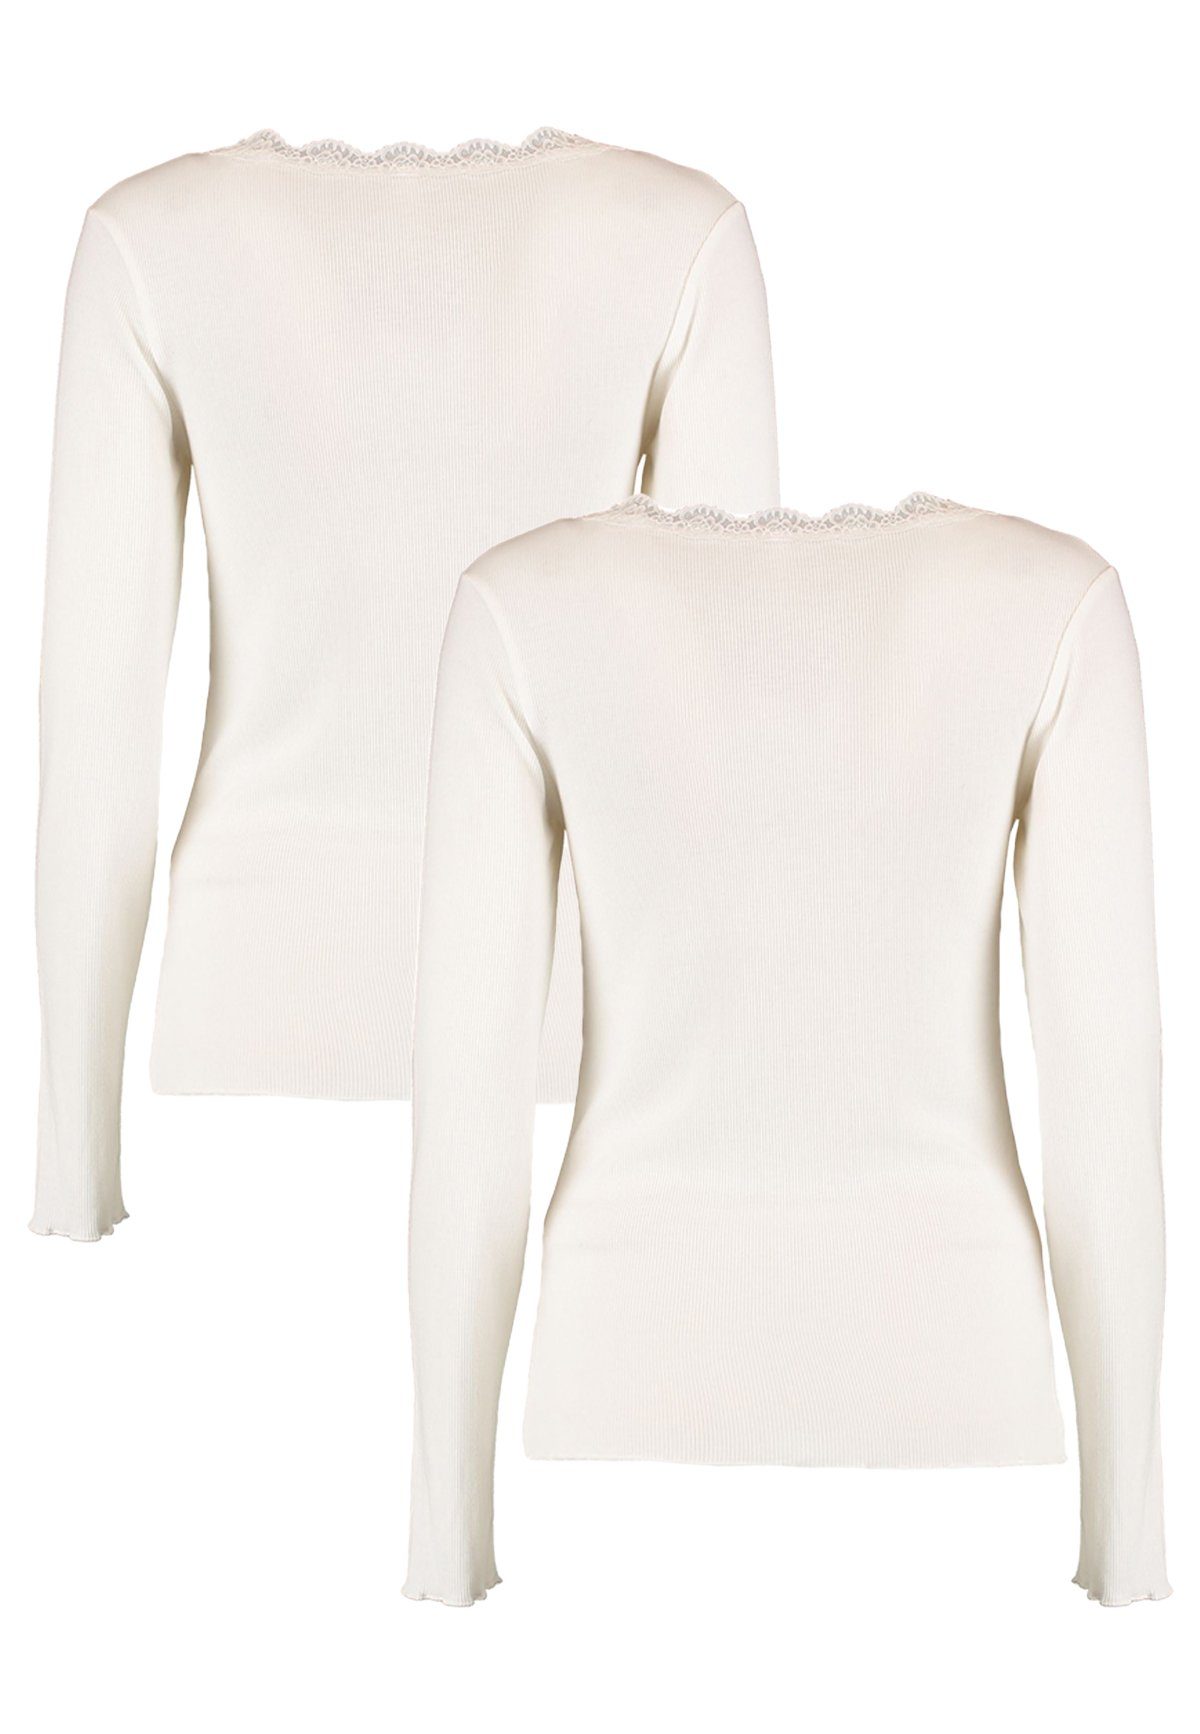 HaILY’S T-Shirt Langarm Spitzen (2-tlg) Top Weiß-2 2-er 5903 Fi44ona Shirt in Set